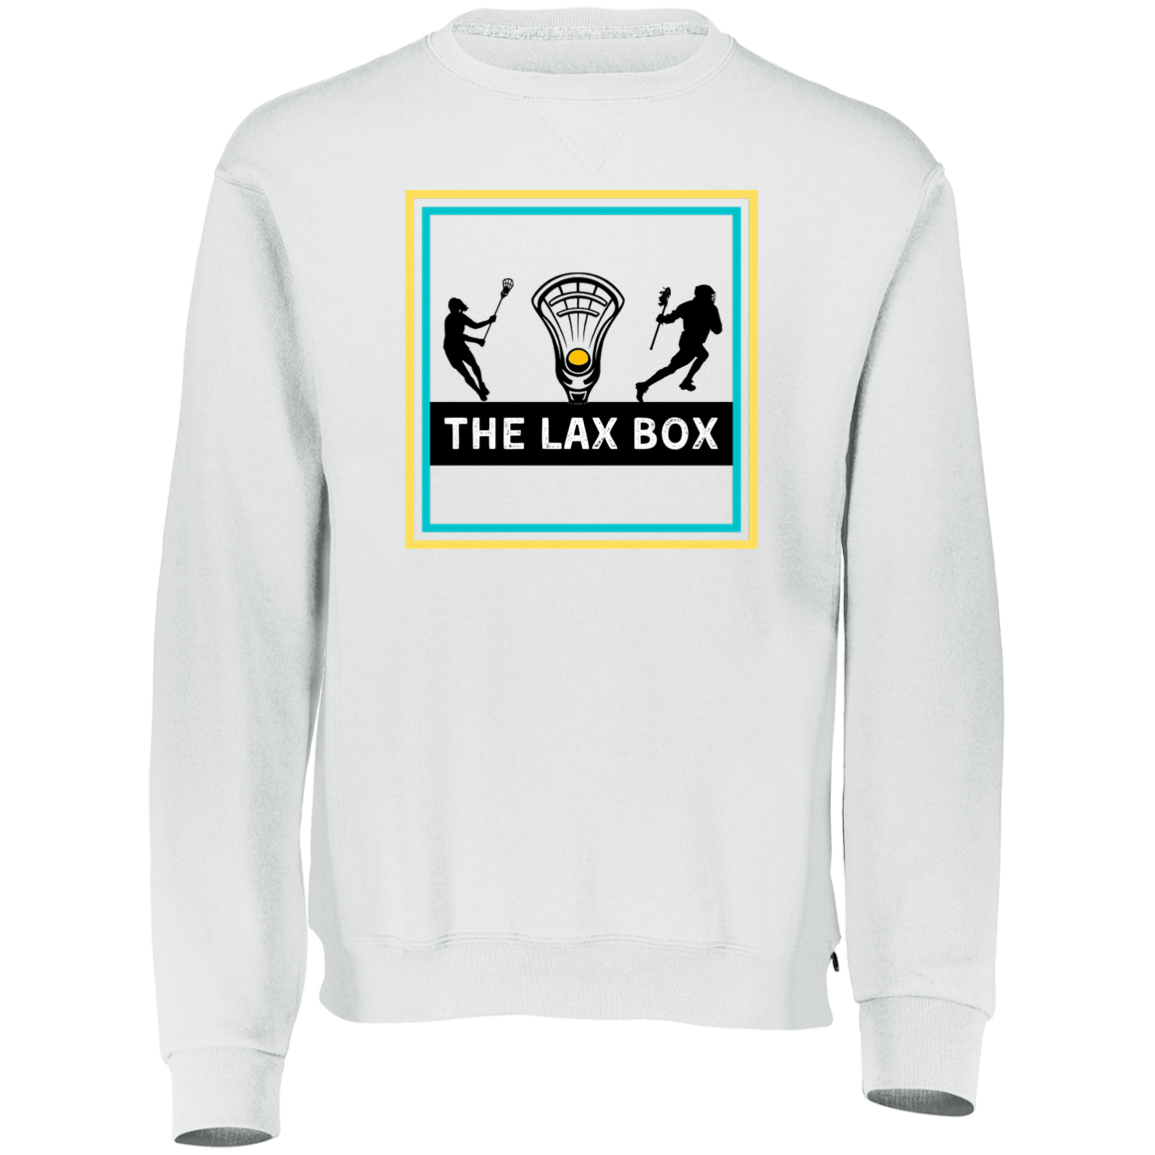 The Lax Box Dri-Power Fleece Crewneck Sweatshirt